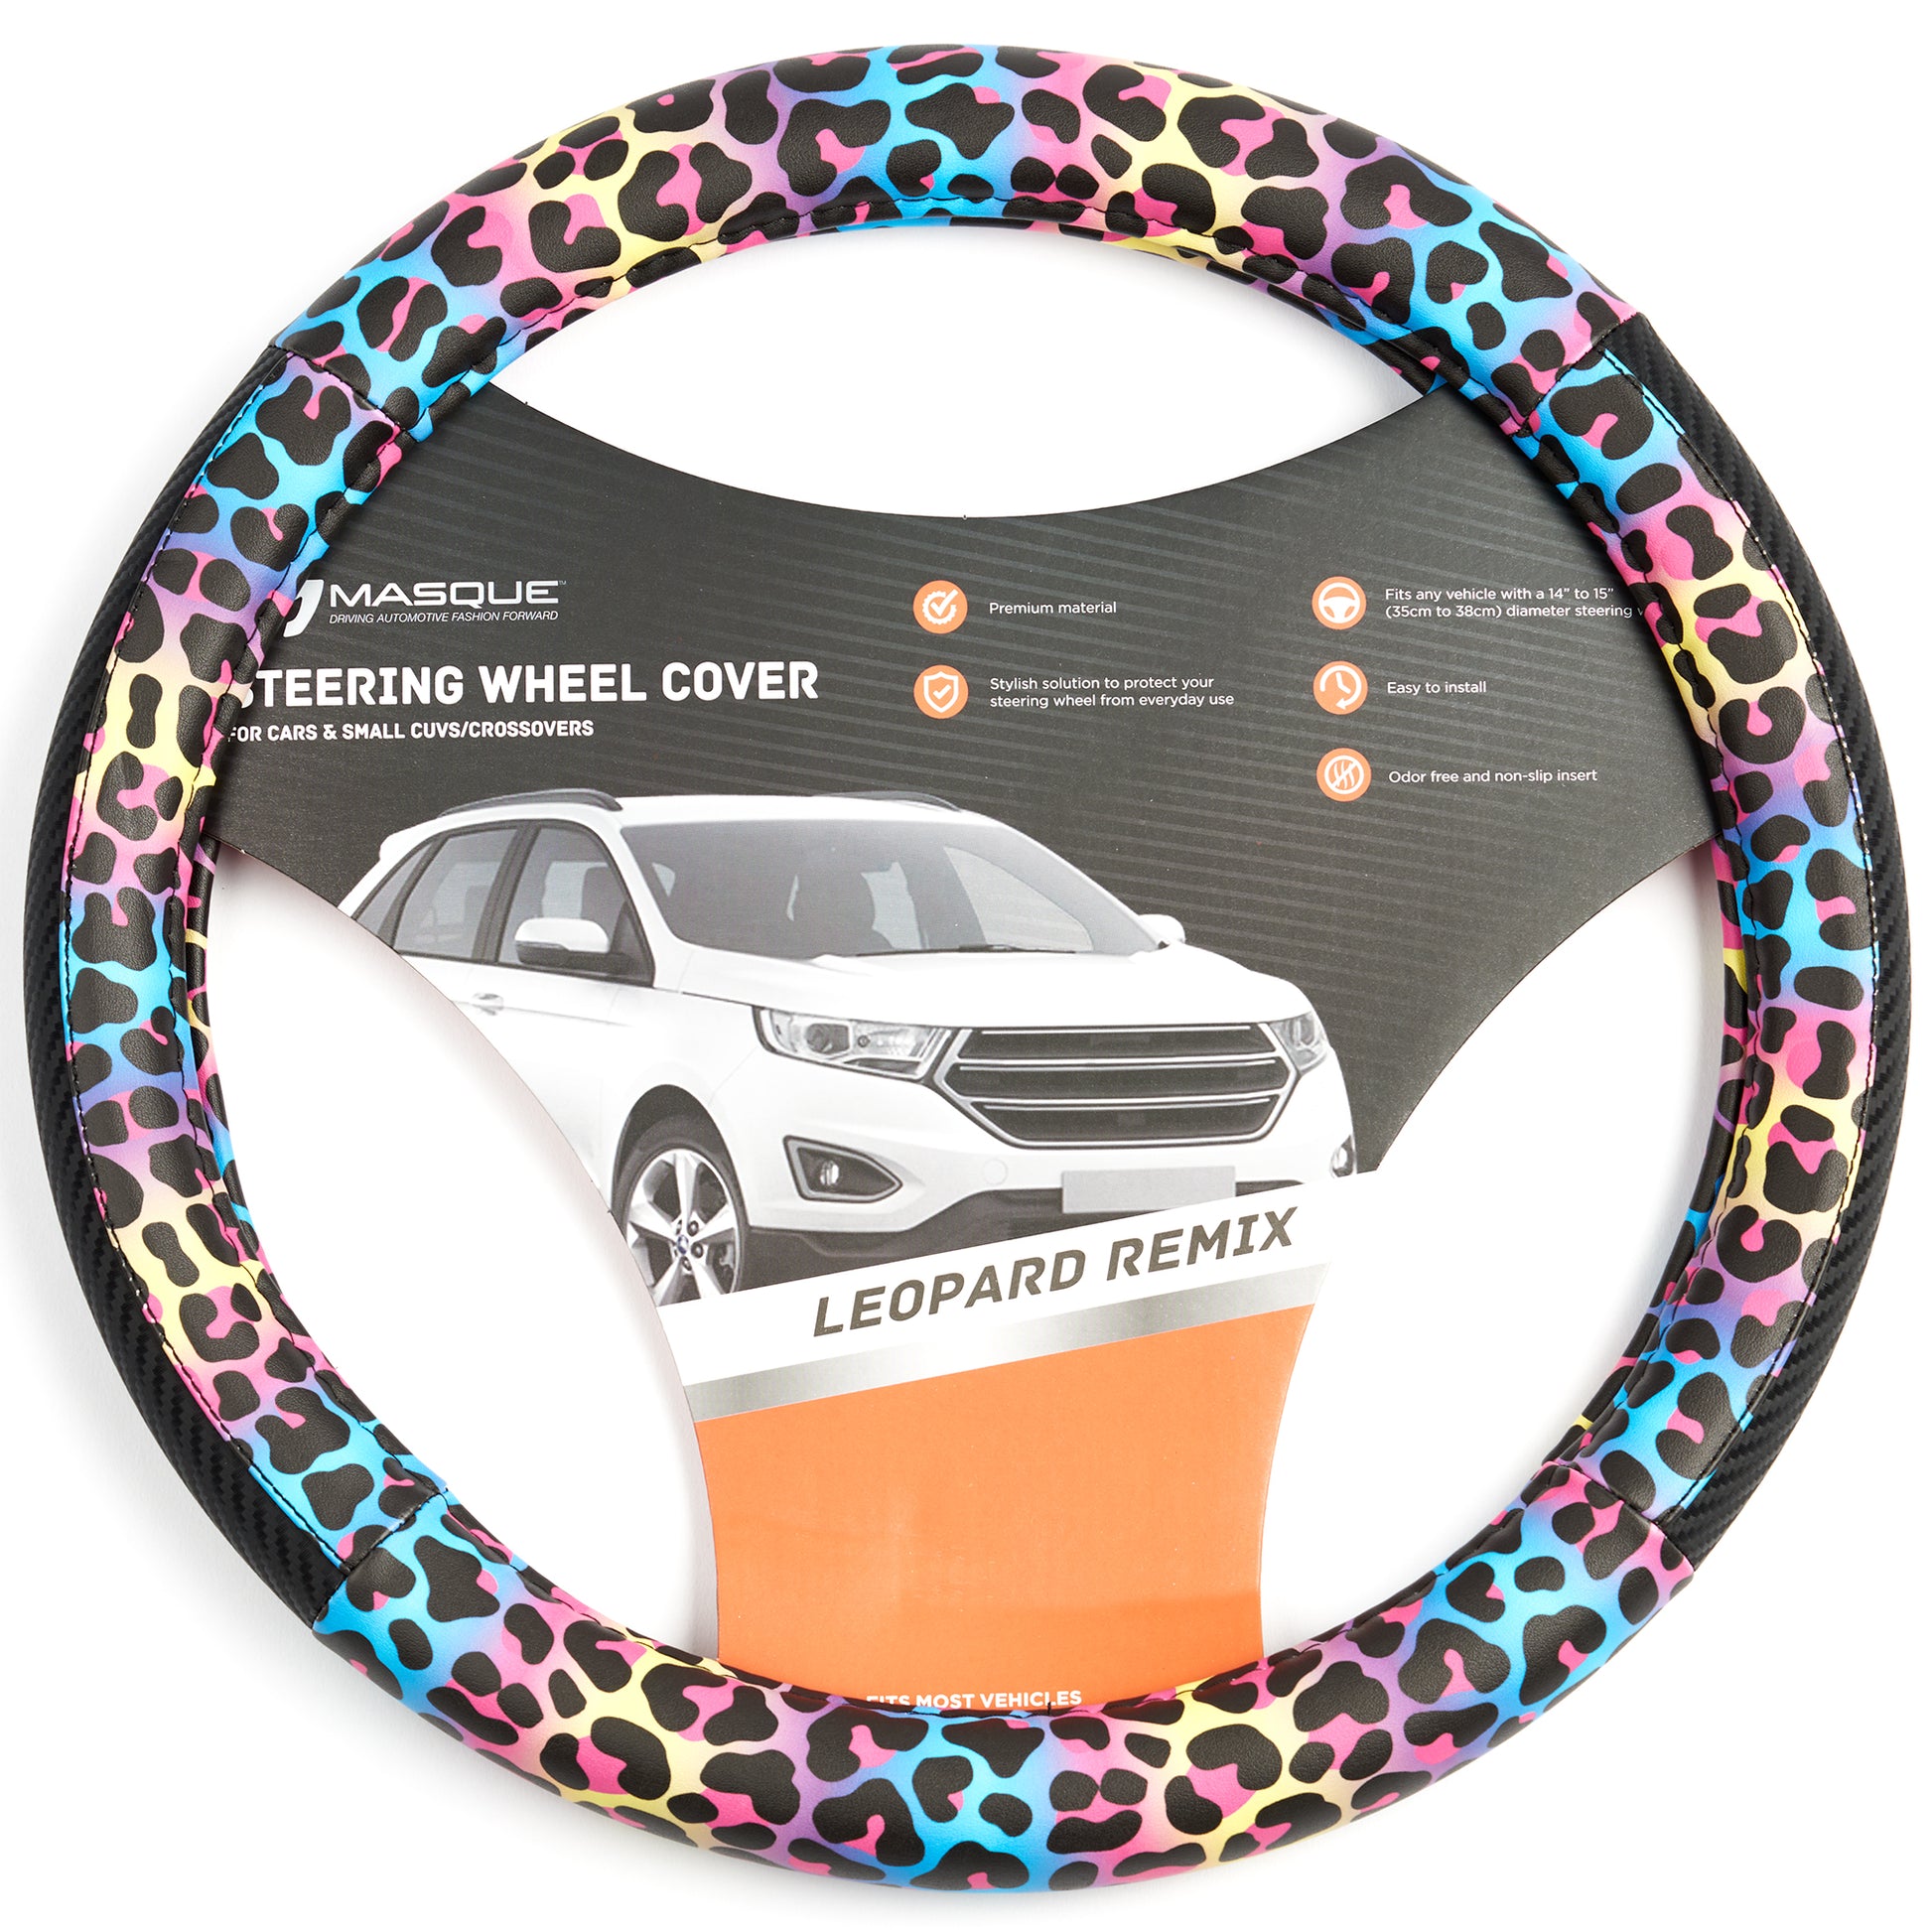 Leopard Remix Steering Wheel Cover – Alpena